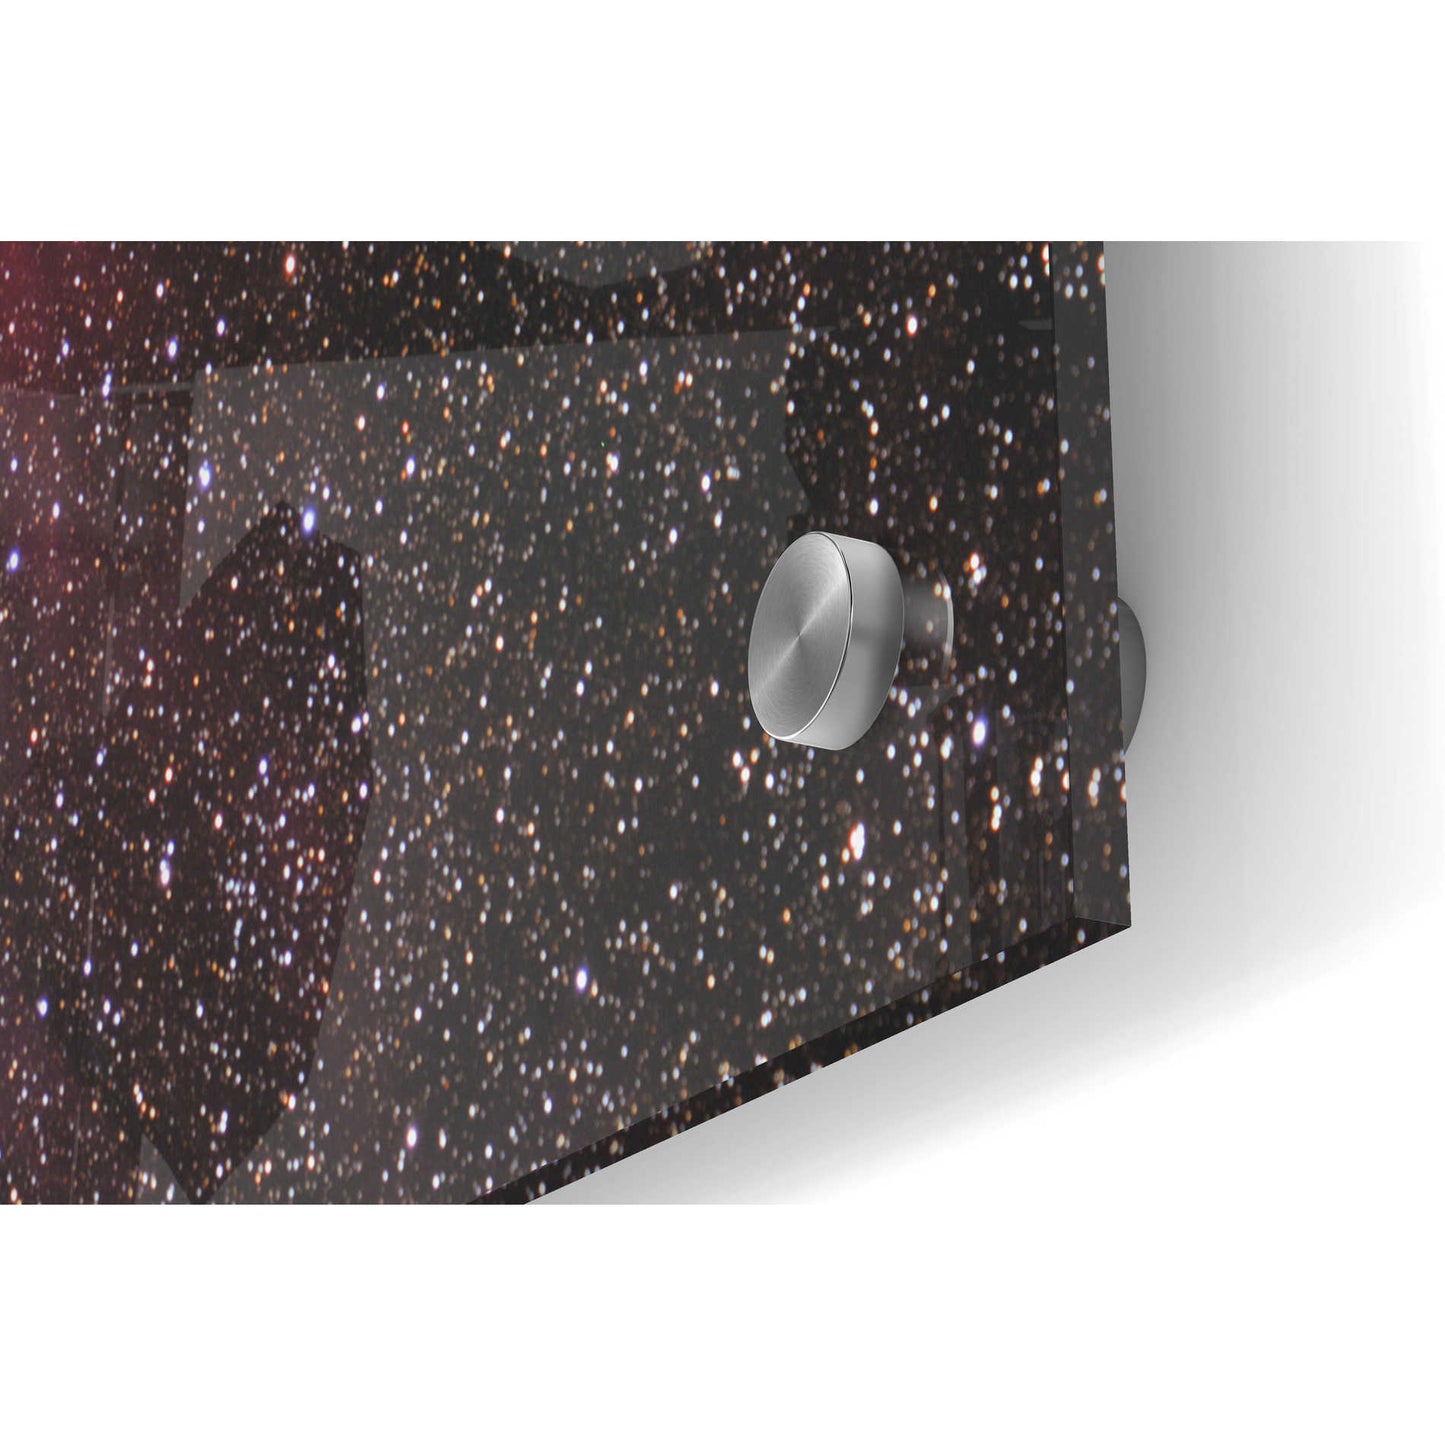 Epic Art 'Nova Carinae,' Acrylic Glass Wall Art,36x24